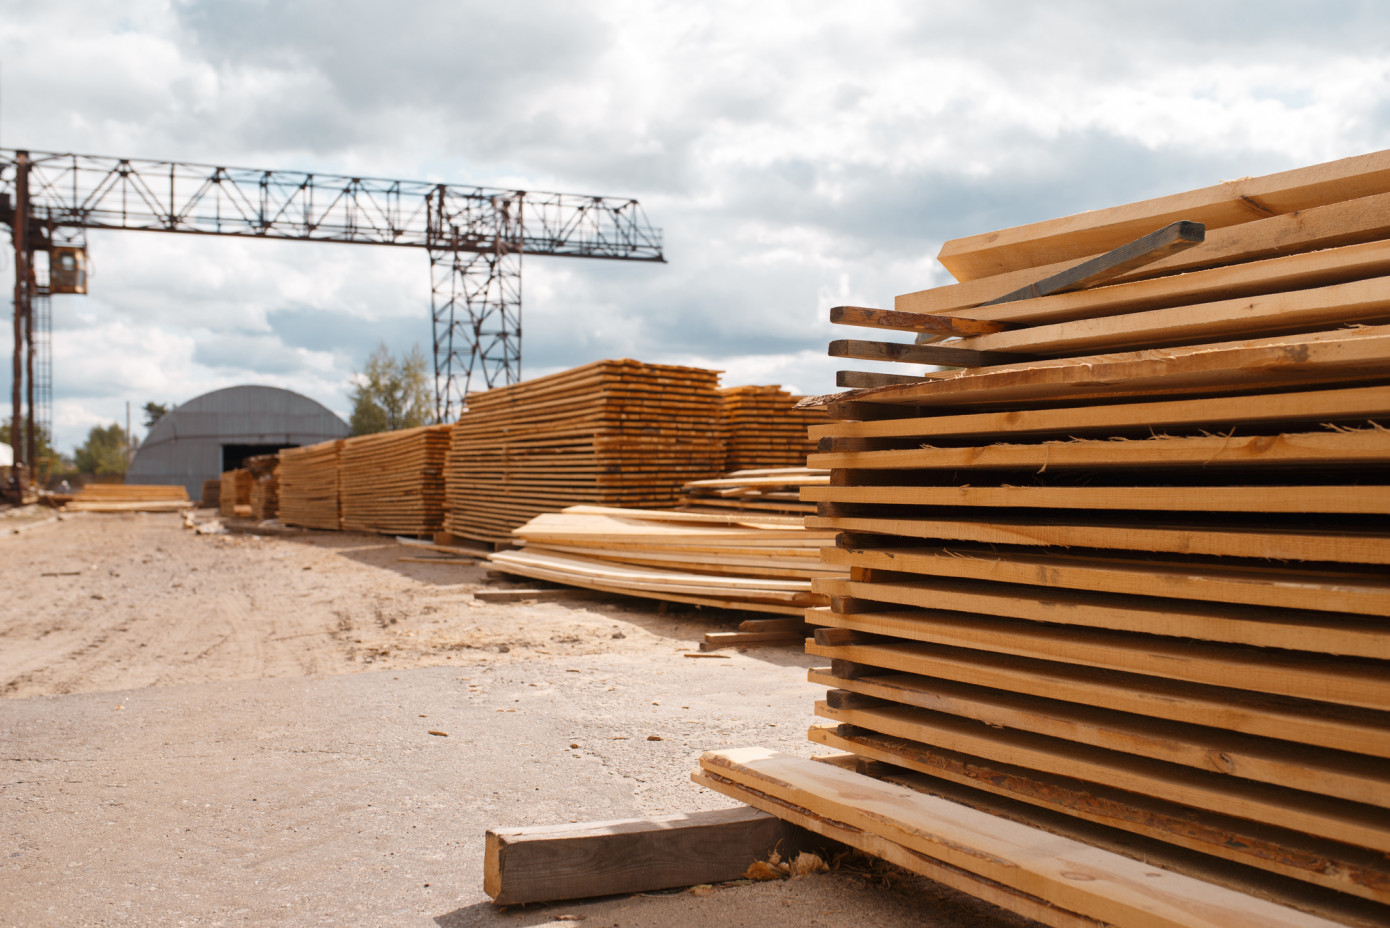 Canadian export lumber price soar 28.6% in August 2021